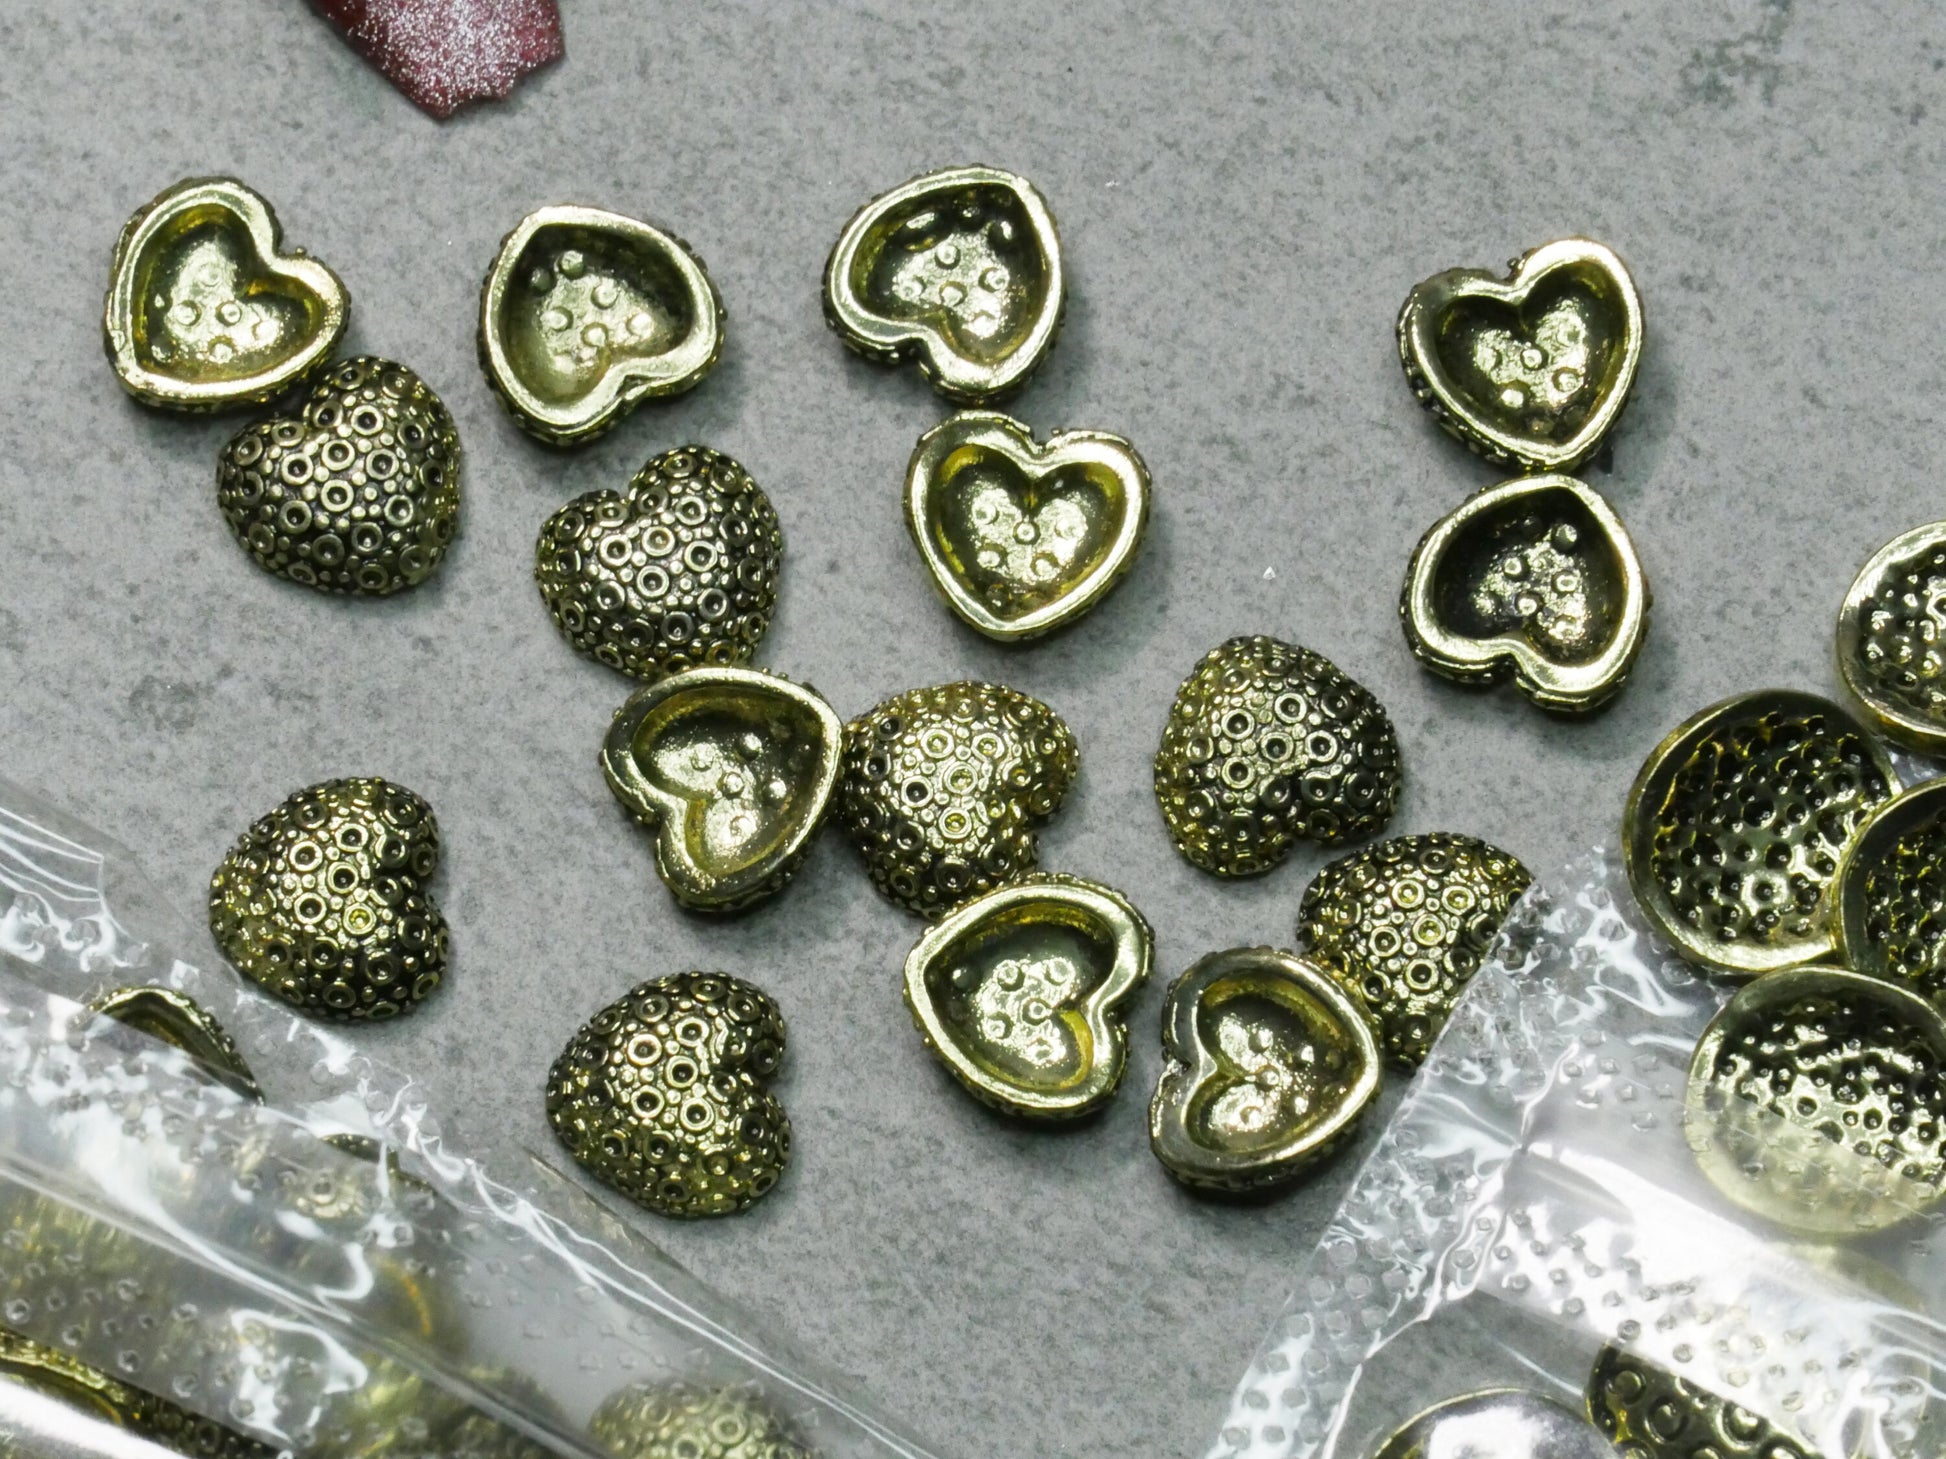 9 pcs 3D Antique Vintage Punk Teddy bear nail decoration/ Bronze Metallic Heart Shaped Decal Nail DIY deco